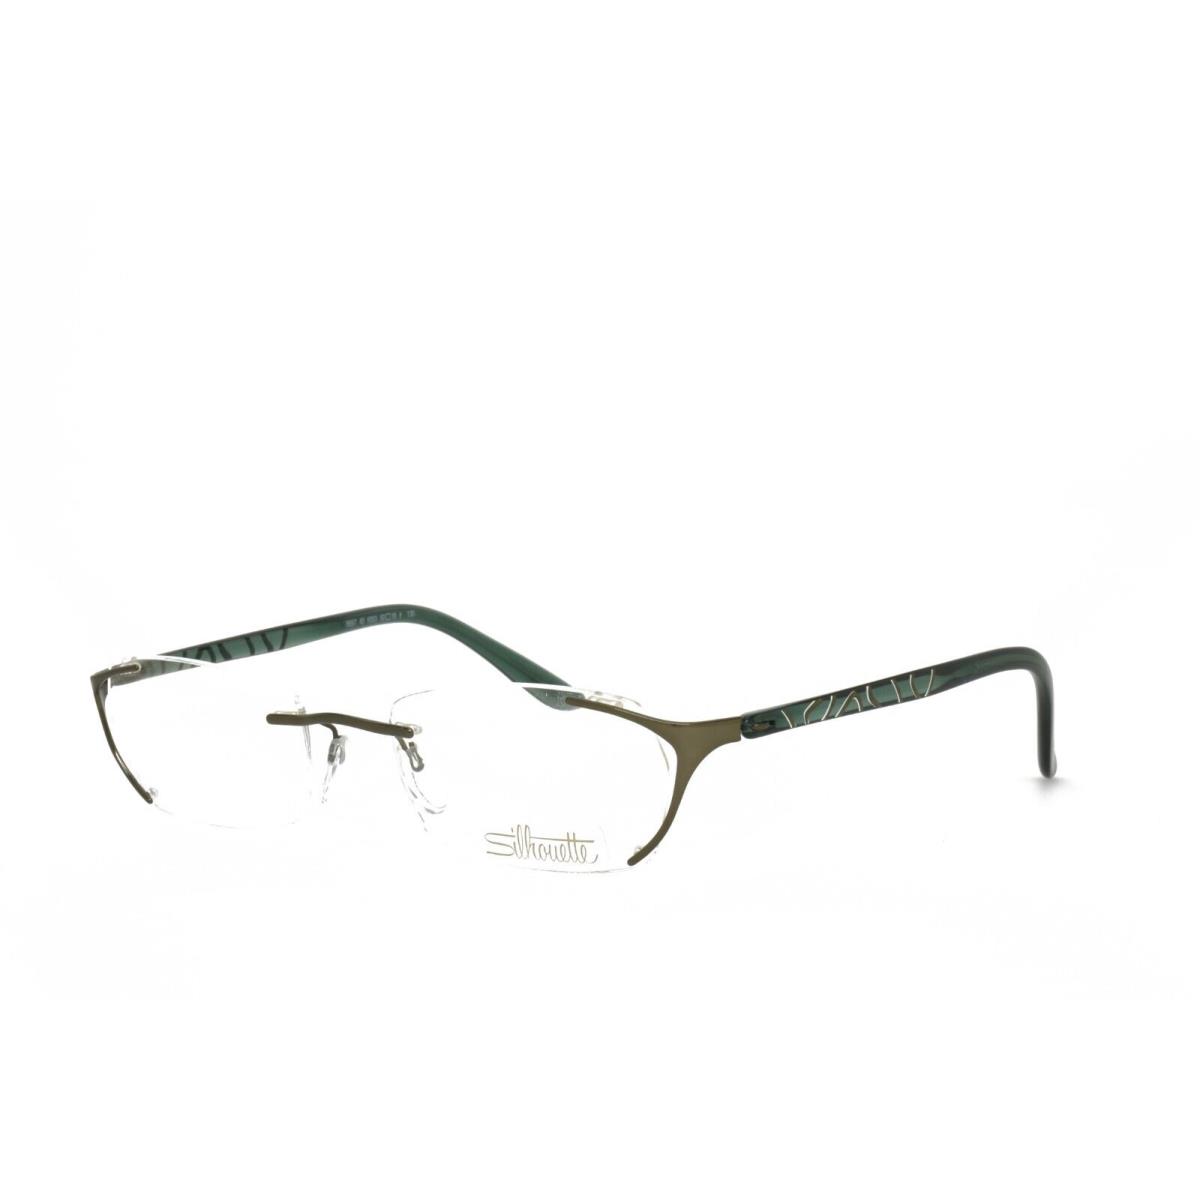 Silhouette 6657 40 6053 50-18-130 Gray Eyeglasses